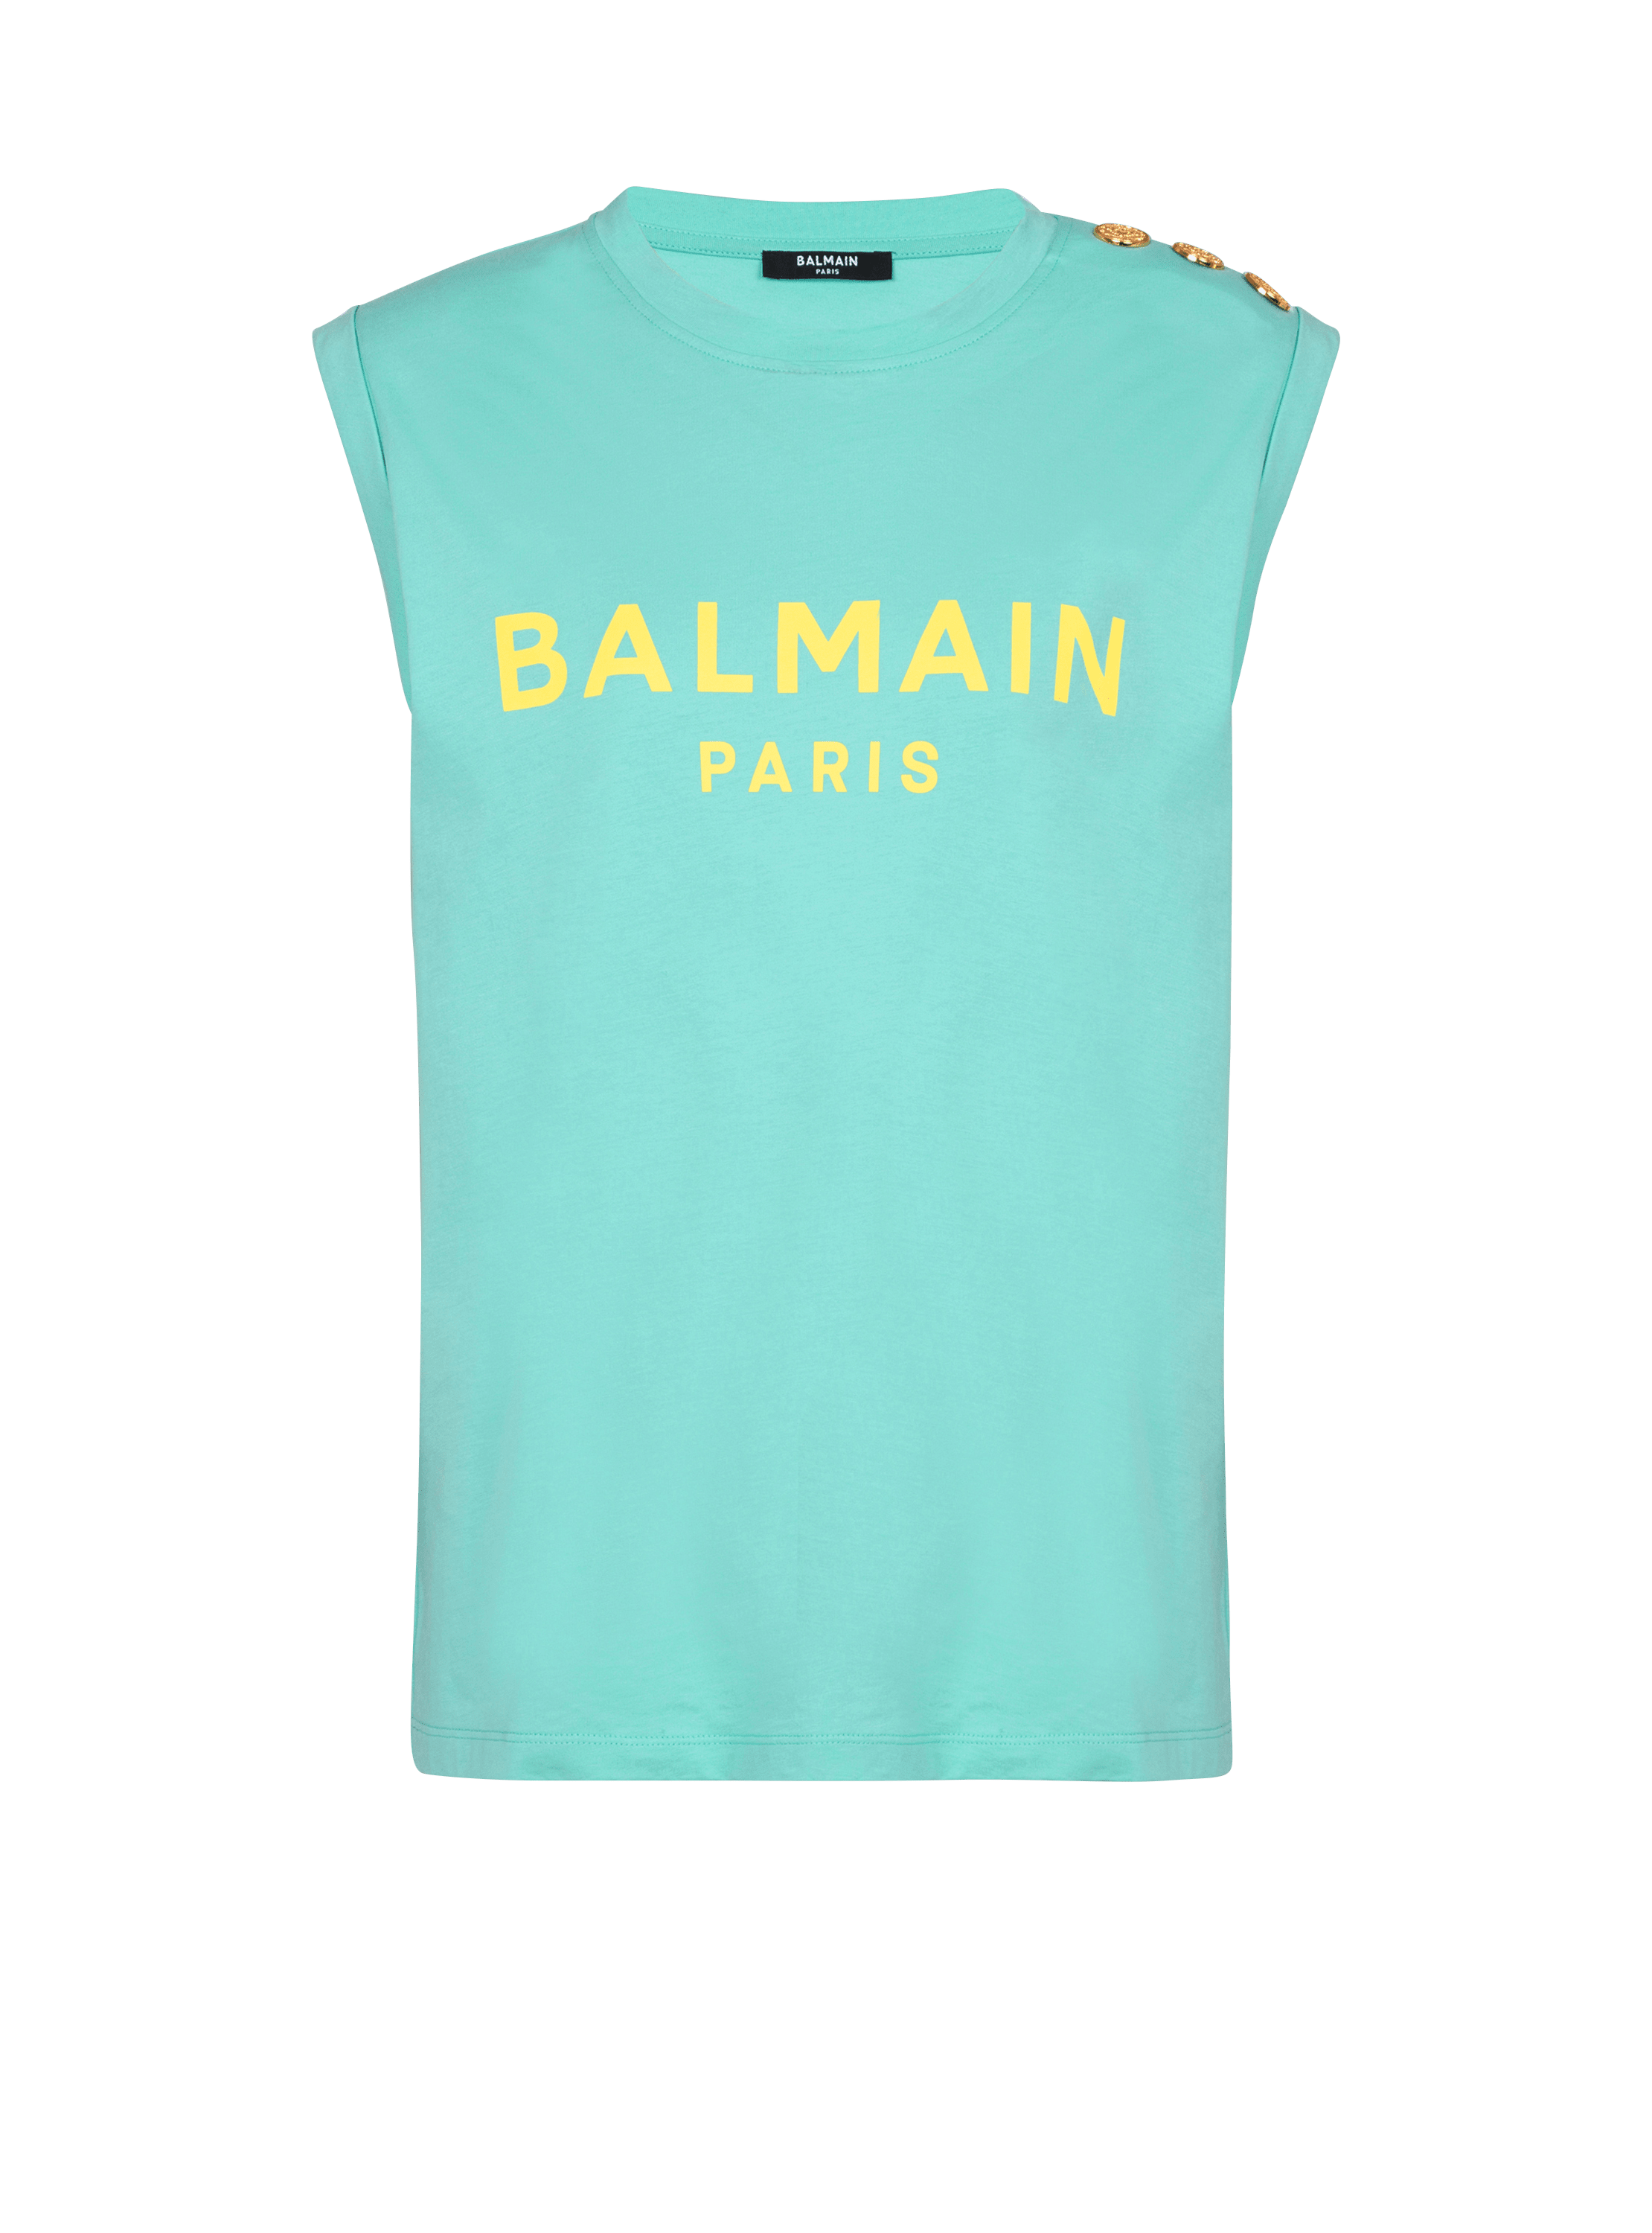 Balmain Paris 프린트 장식 슬리브리스 탑